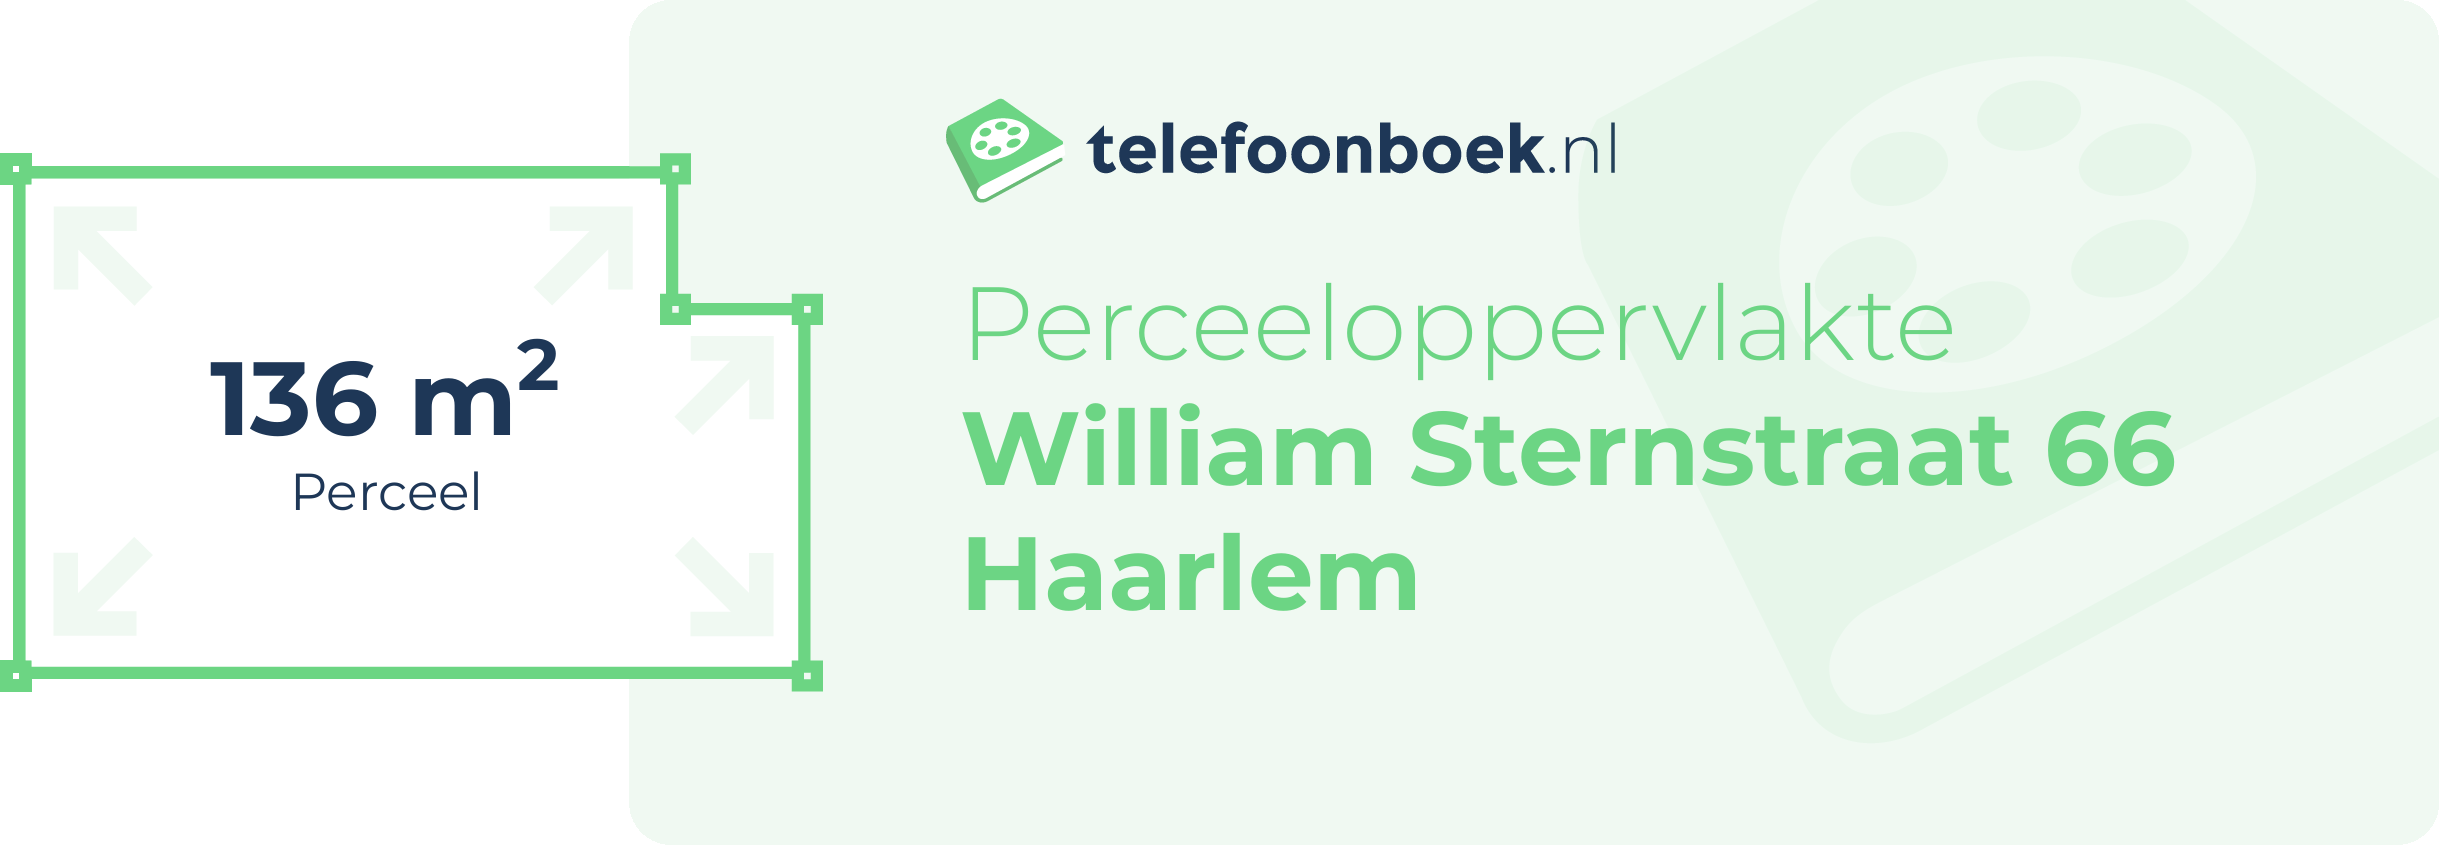 Perceeloppervlakte William Sternstraat 66 Haarlem